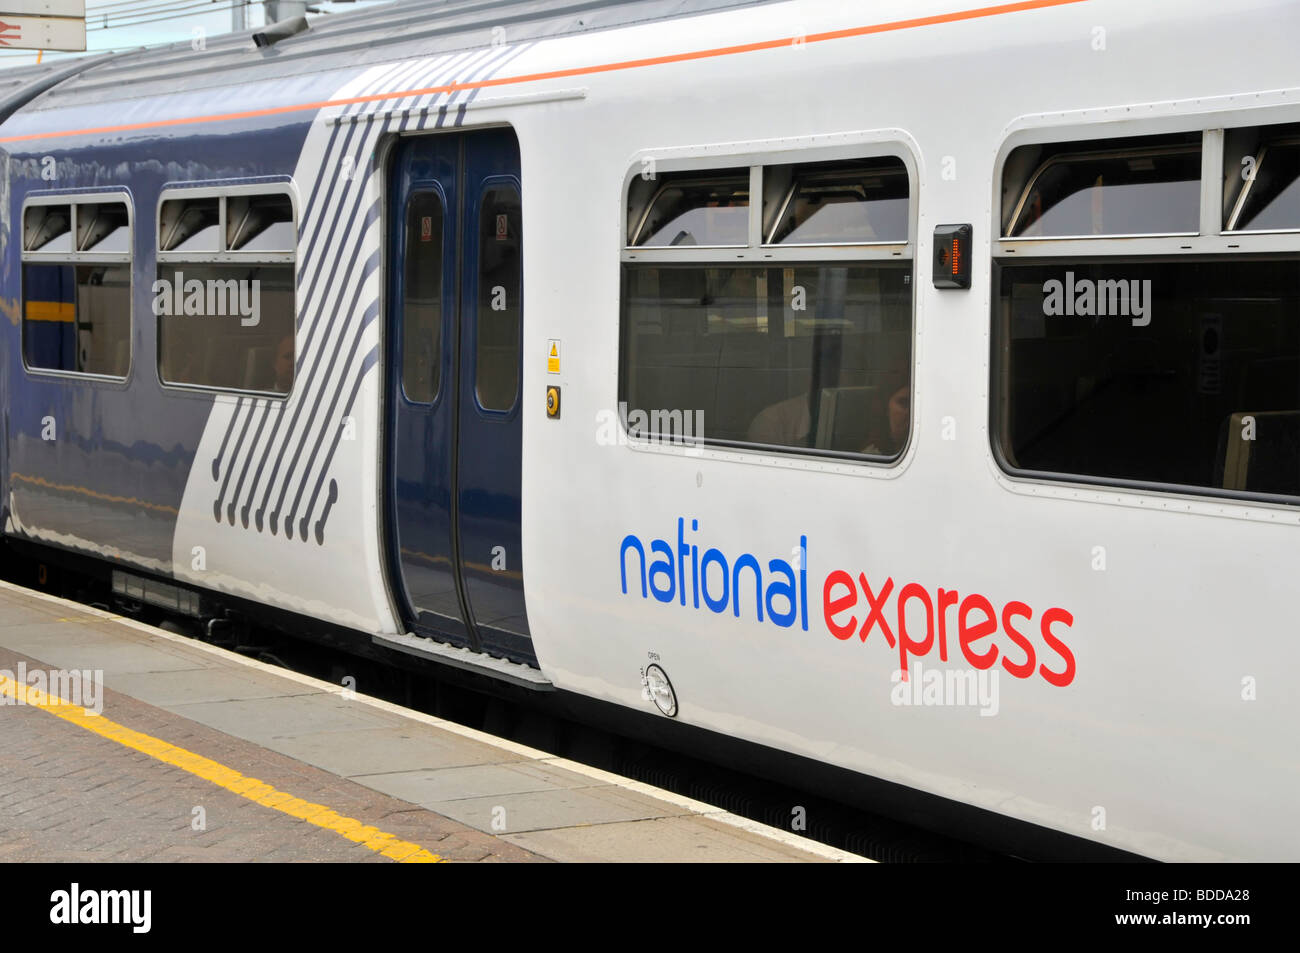 National Express franchise brand logo on side of passenger train railway carriage waiting at station platform London England UK Stock Photo